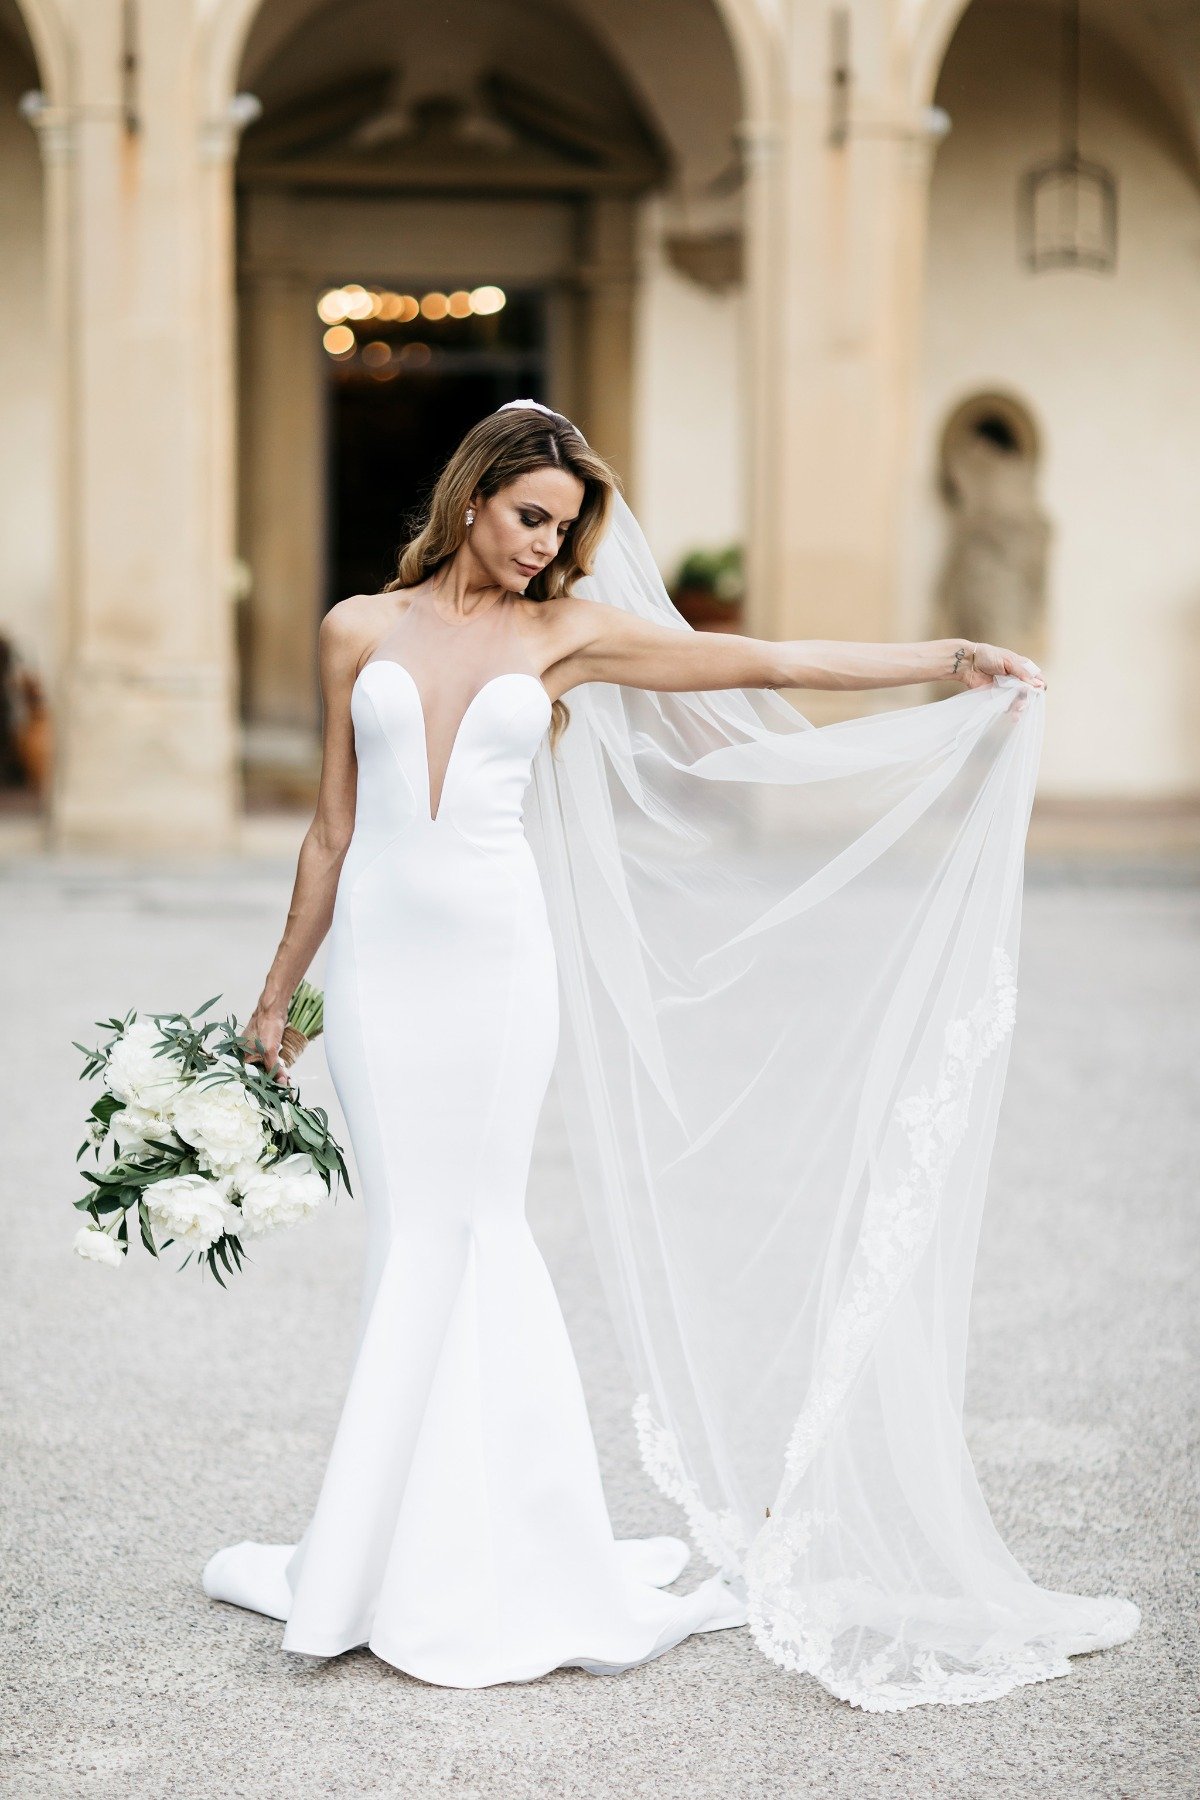 Gorgeous Michael Costello wedding dress